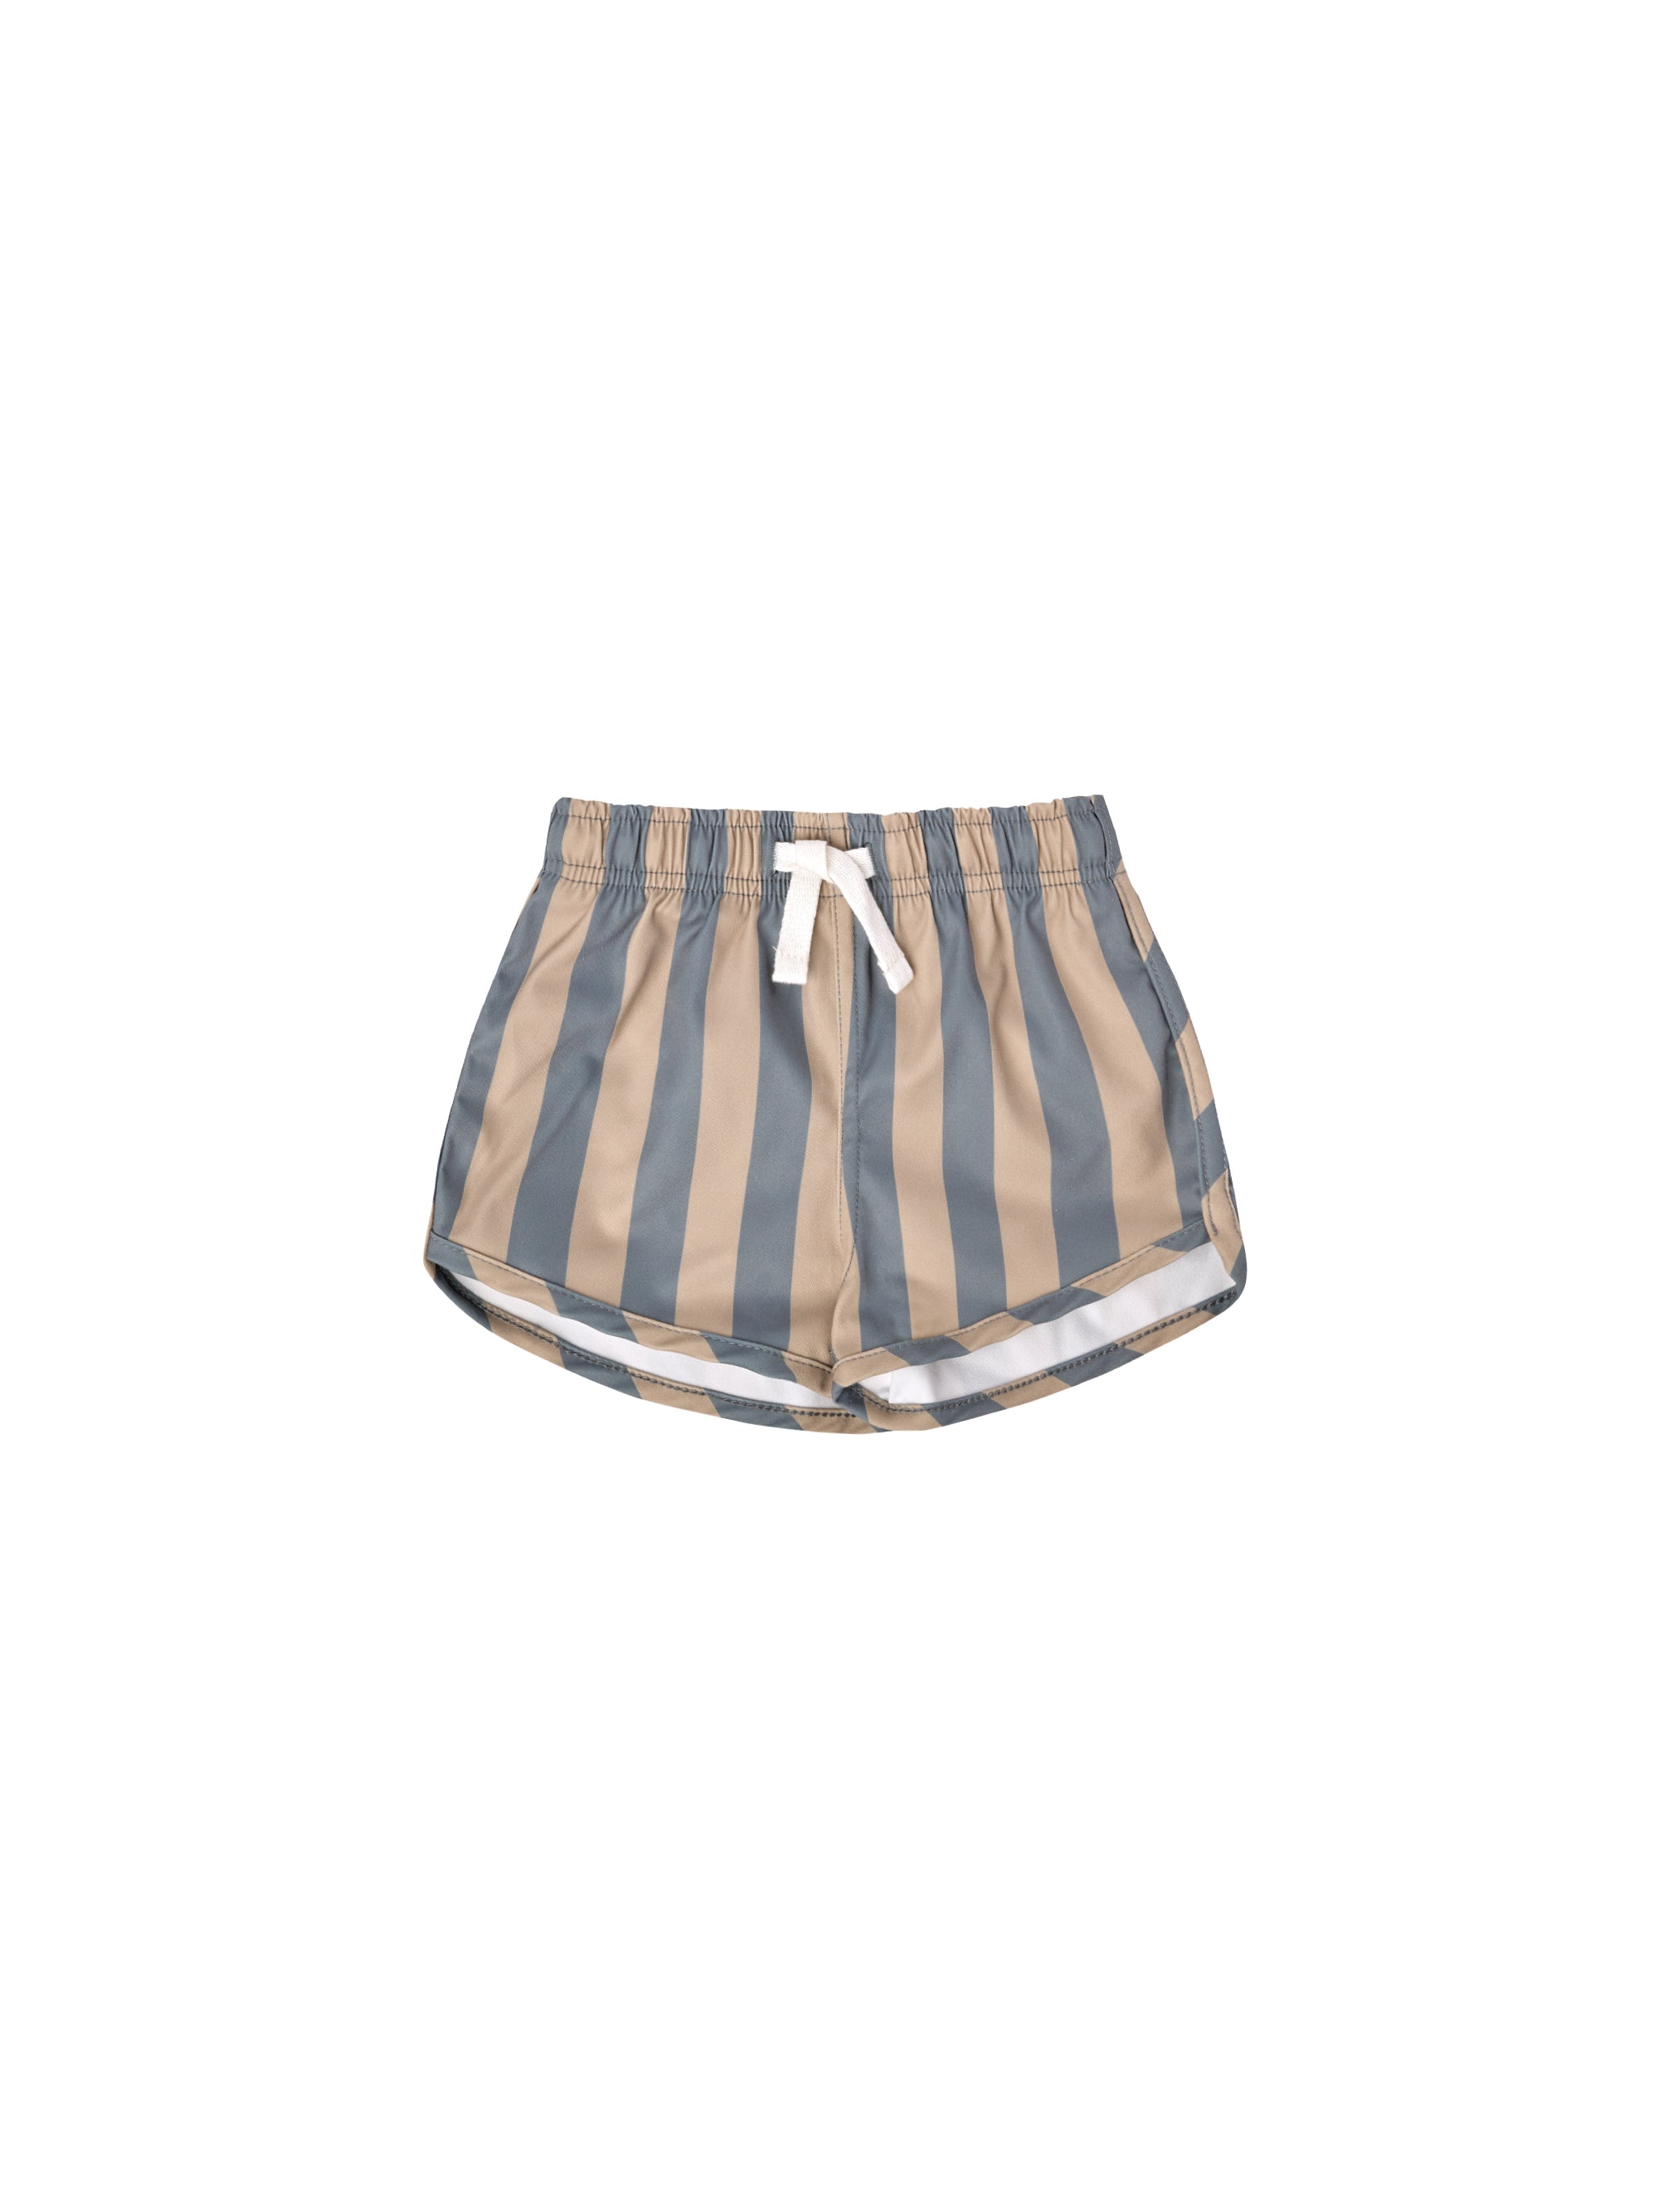 Quincy Mae | Boys Swim Shorts | Ocean + Latte Stripe